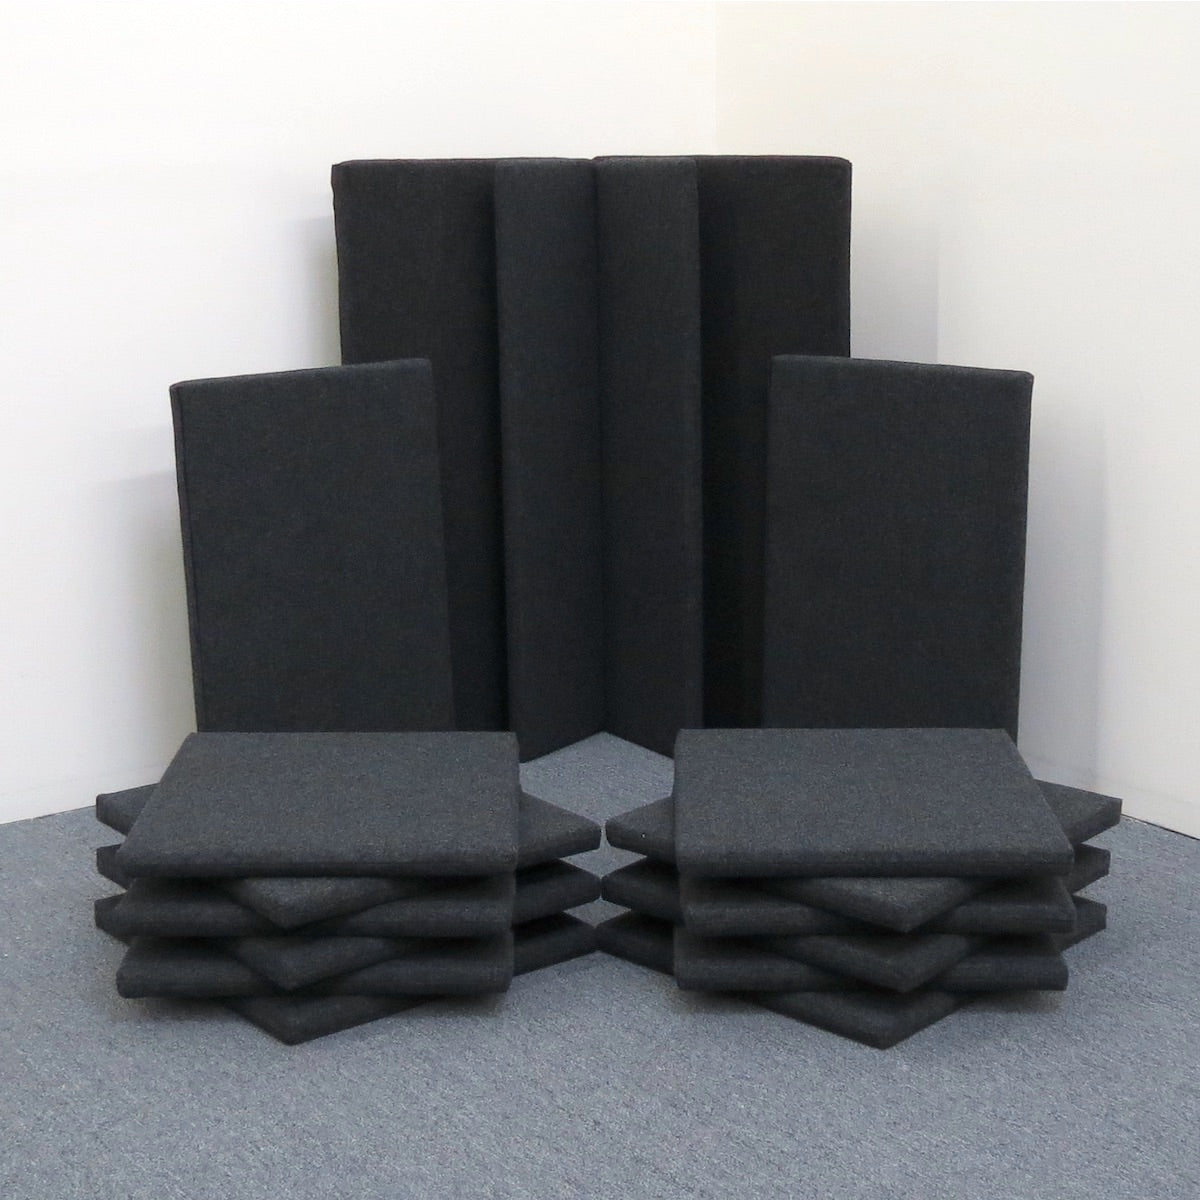 ClearSonic SP10 SORBER Sound Absorption Baffles StudioPac 10